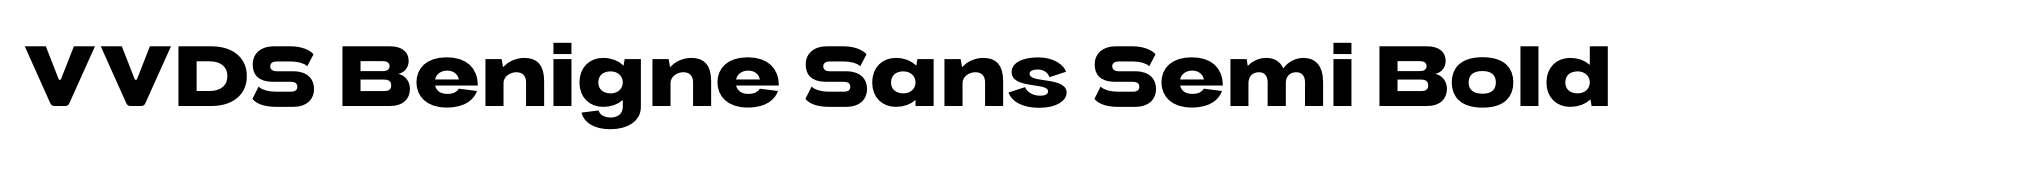 VVDS Benigne Sans Semi Bold image